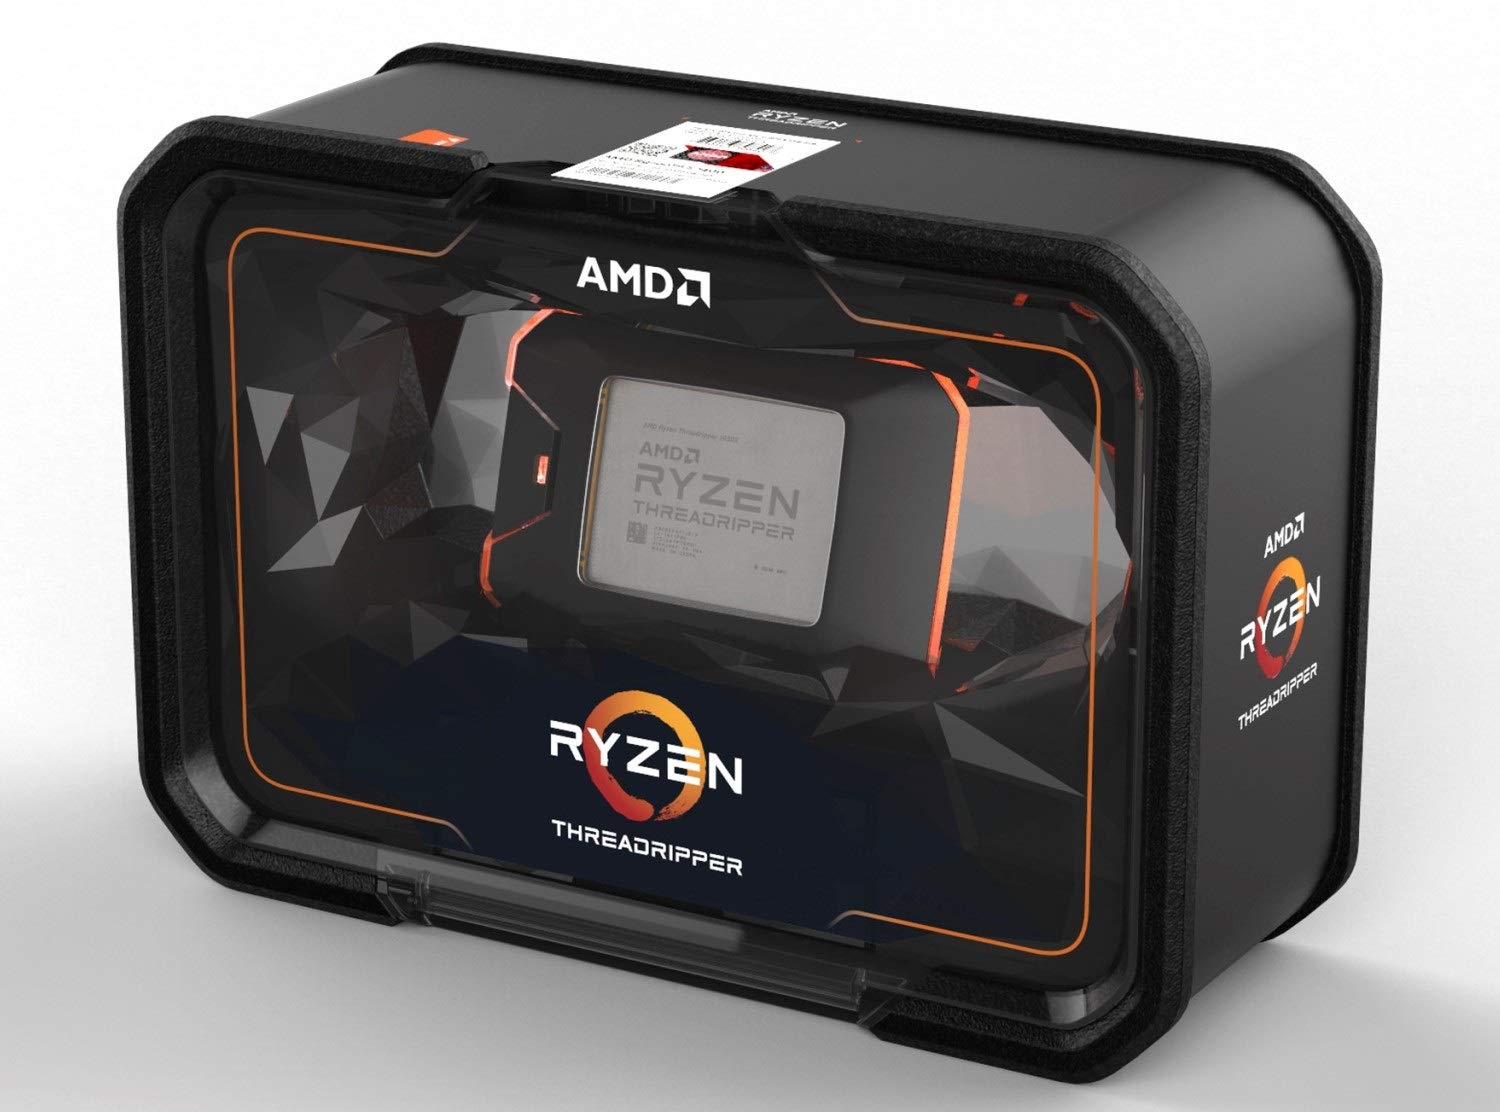 AMD Ryzen Threadripper: The Fascinating Story Behind The Processor